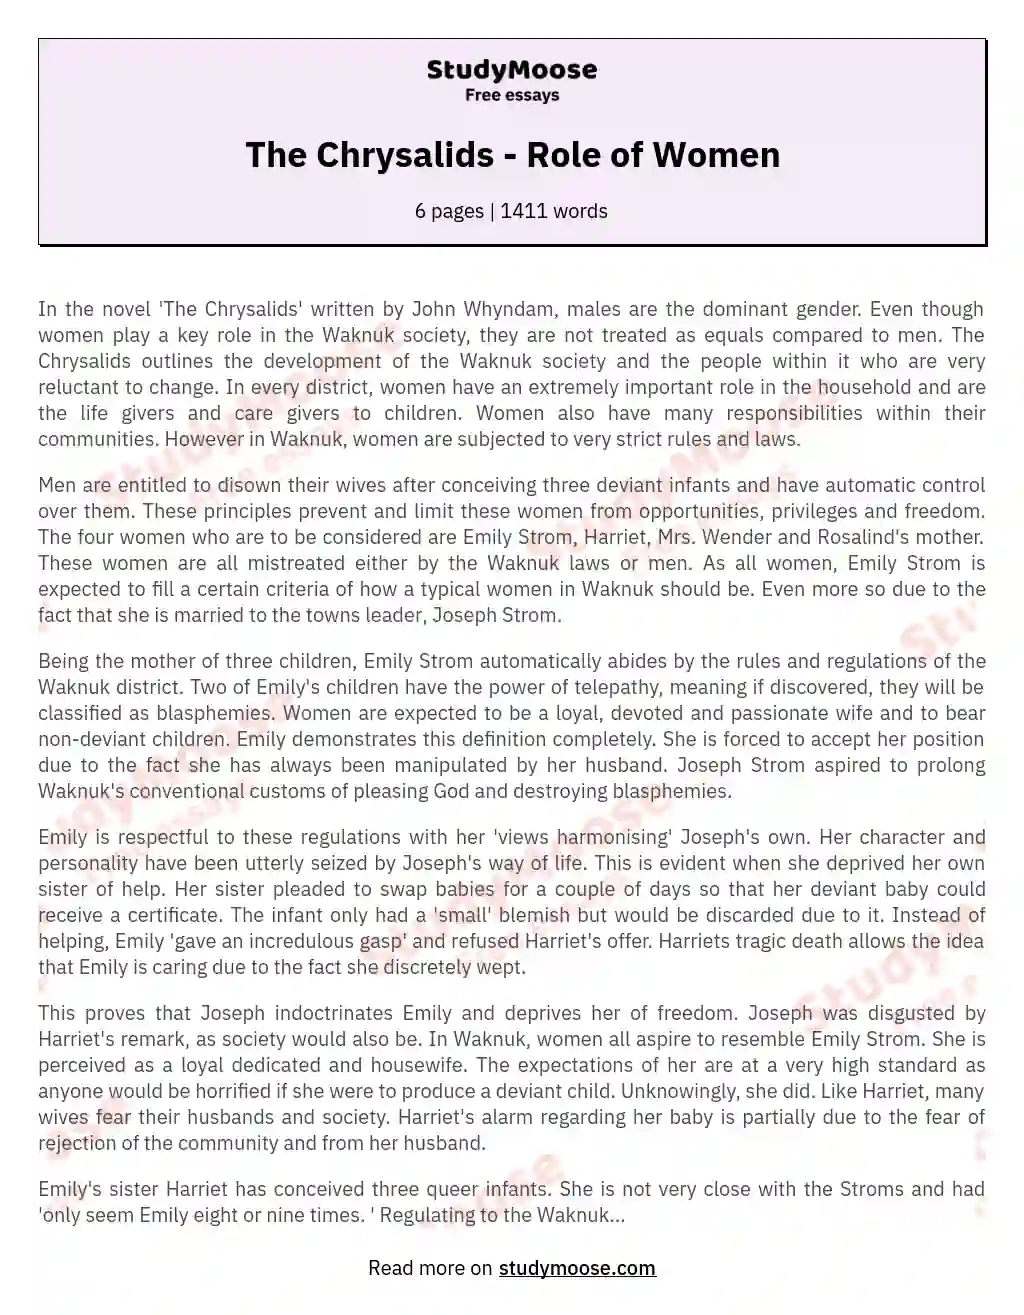 The Chrysalids - Role of Women essay